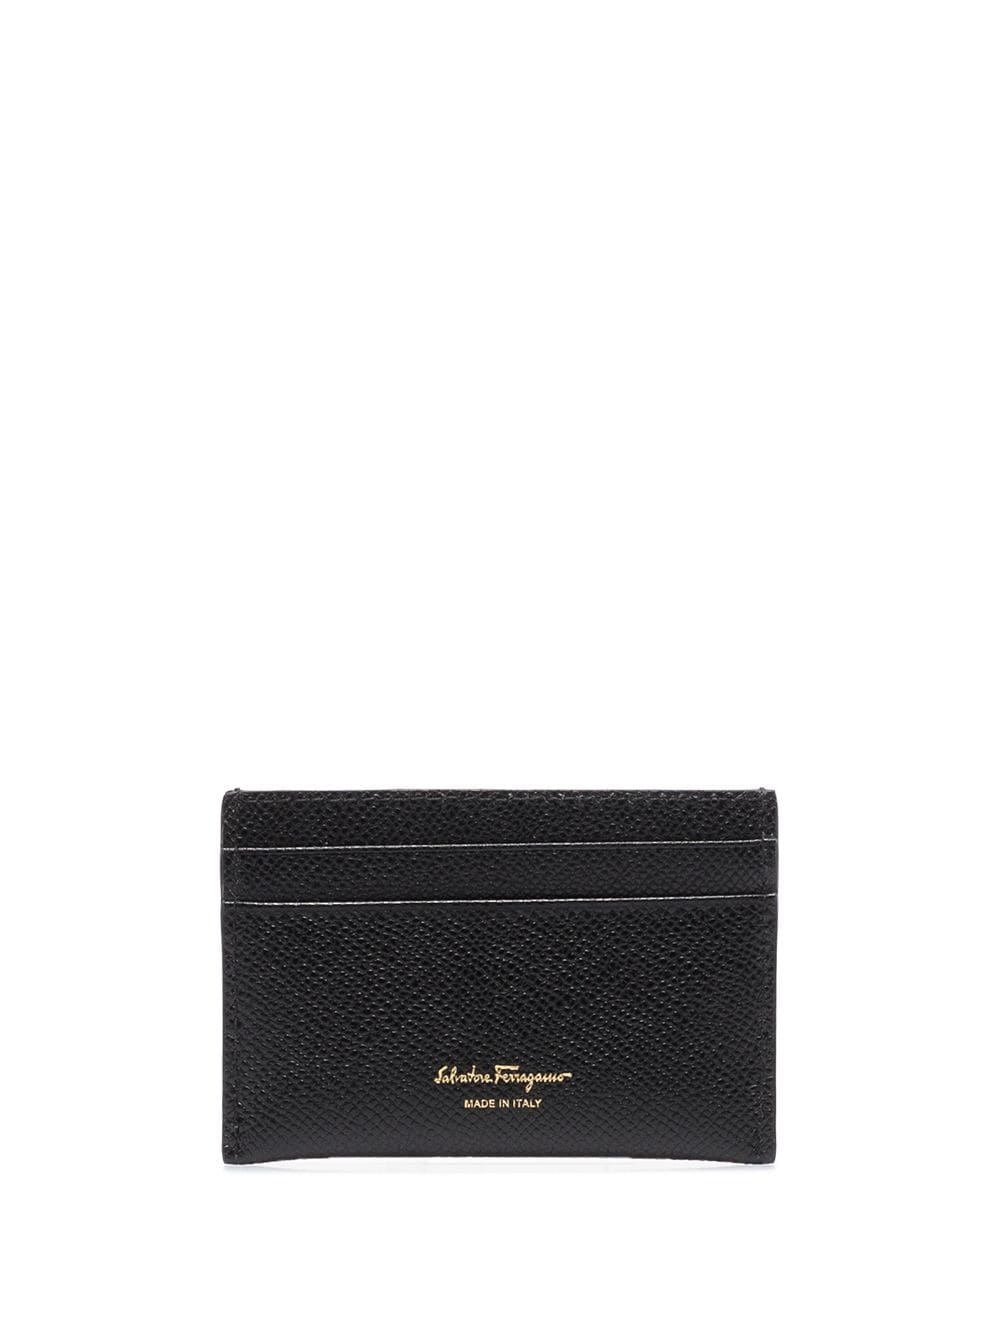 Gancini leather card case - 2